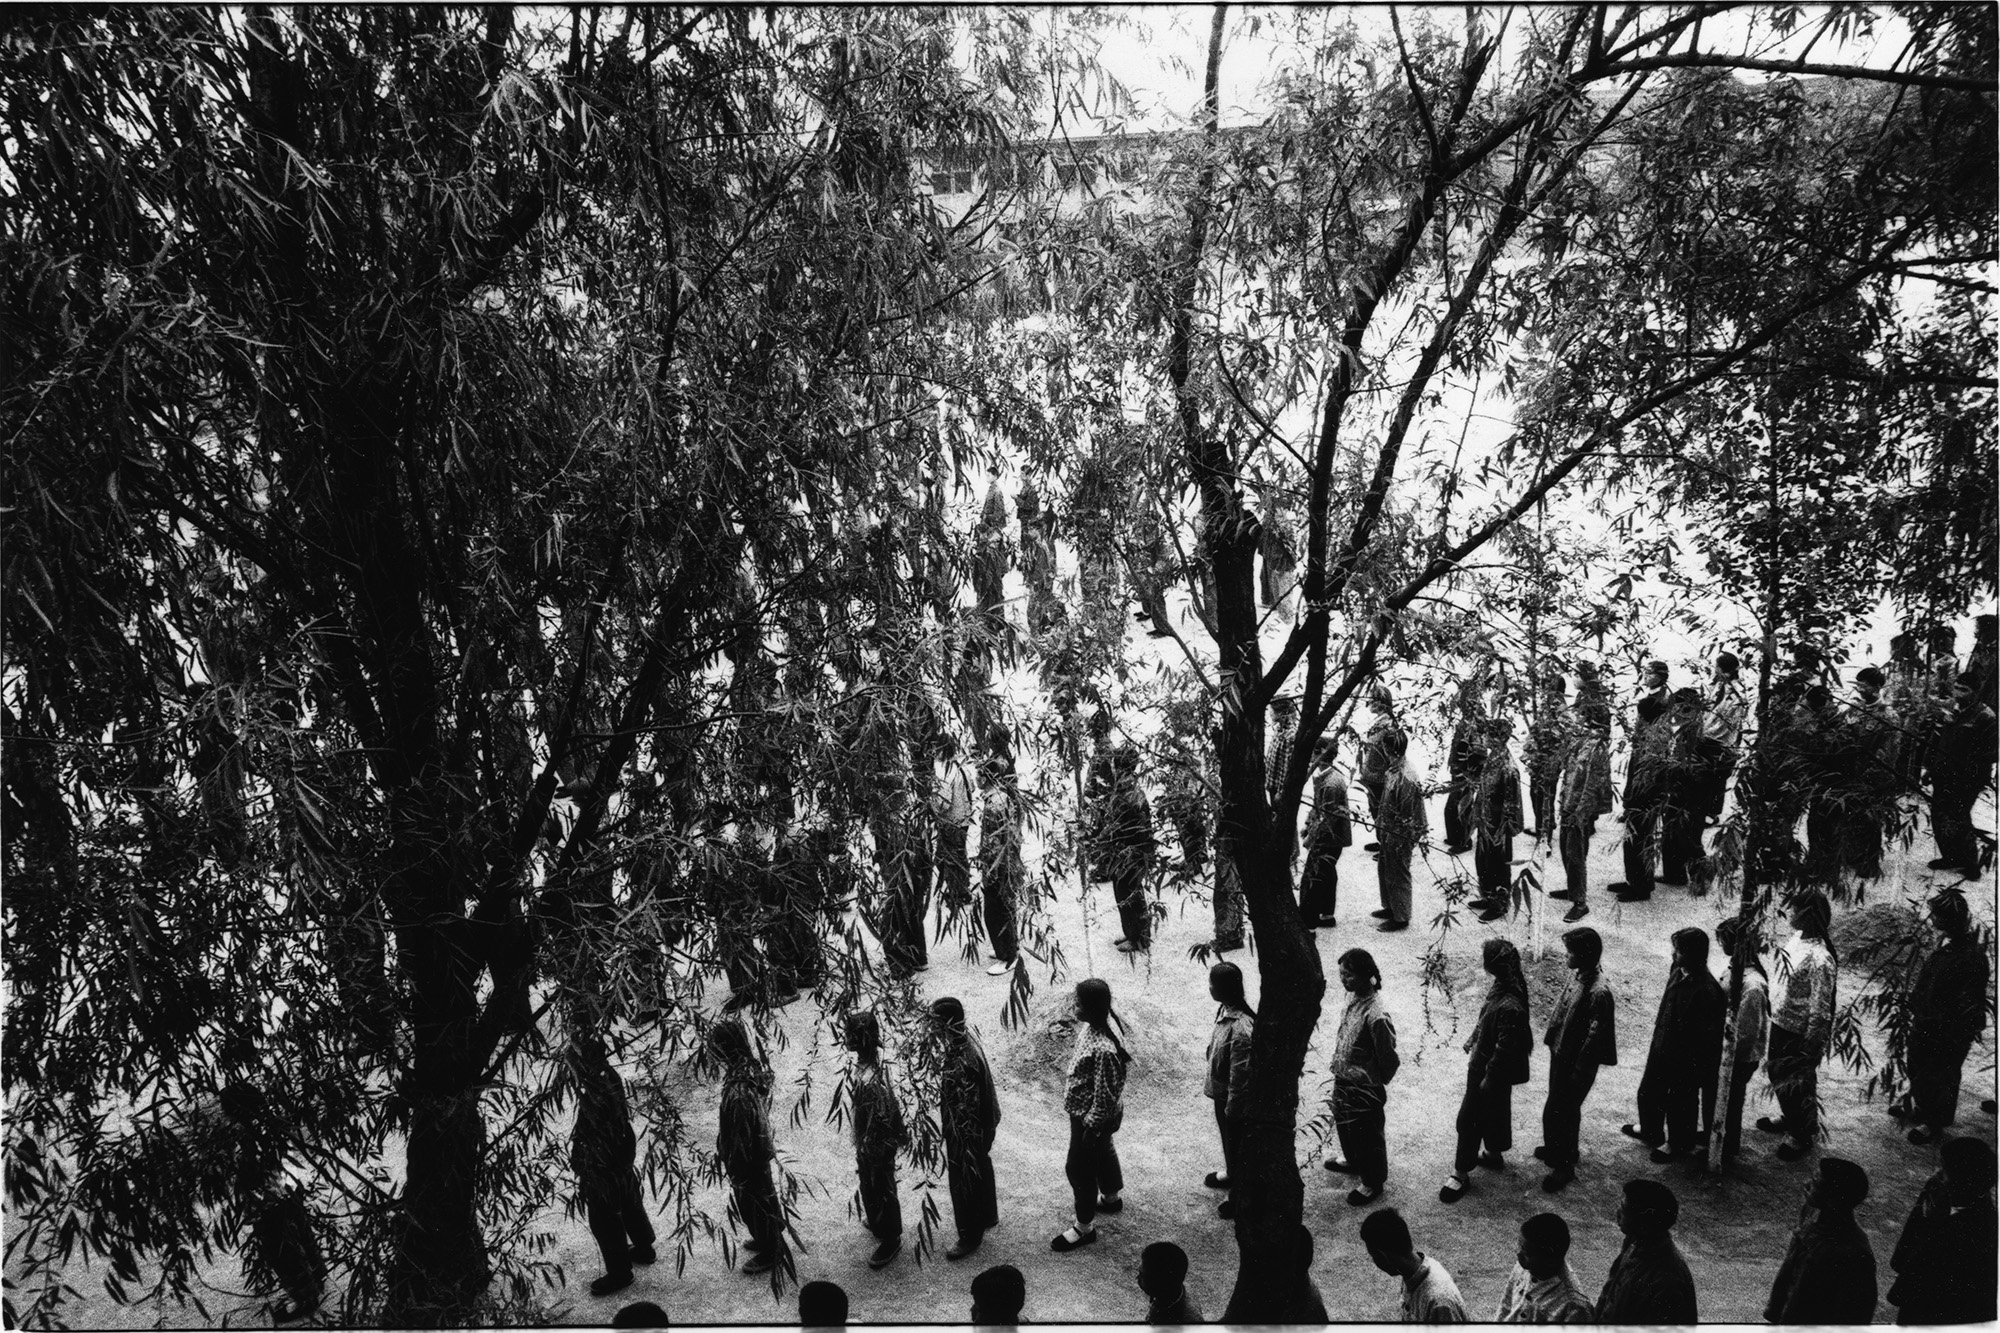 kazuo kitai china 1970s photography of china 23北京第十五中学校1973 - Kazuo Kitai |  - Kazuo Kitai